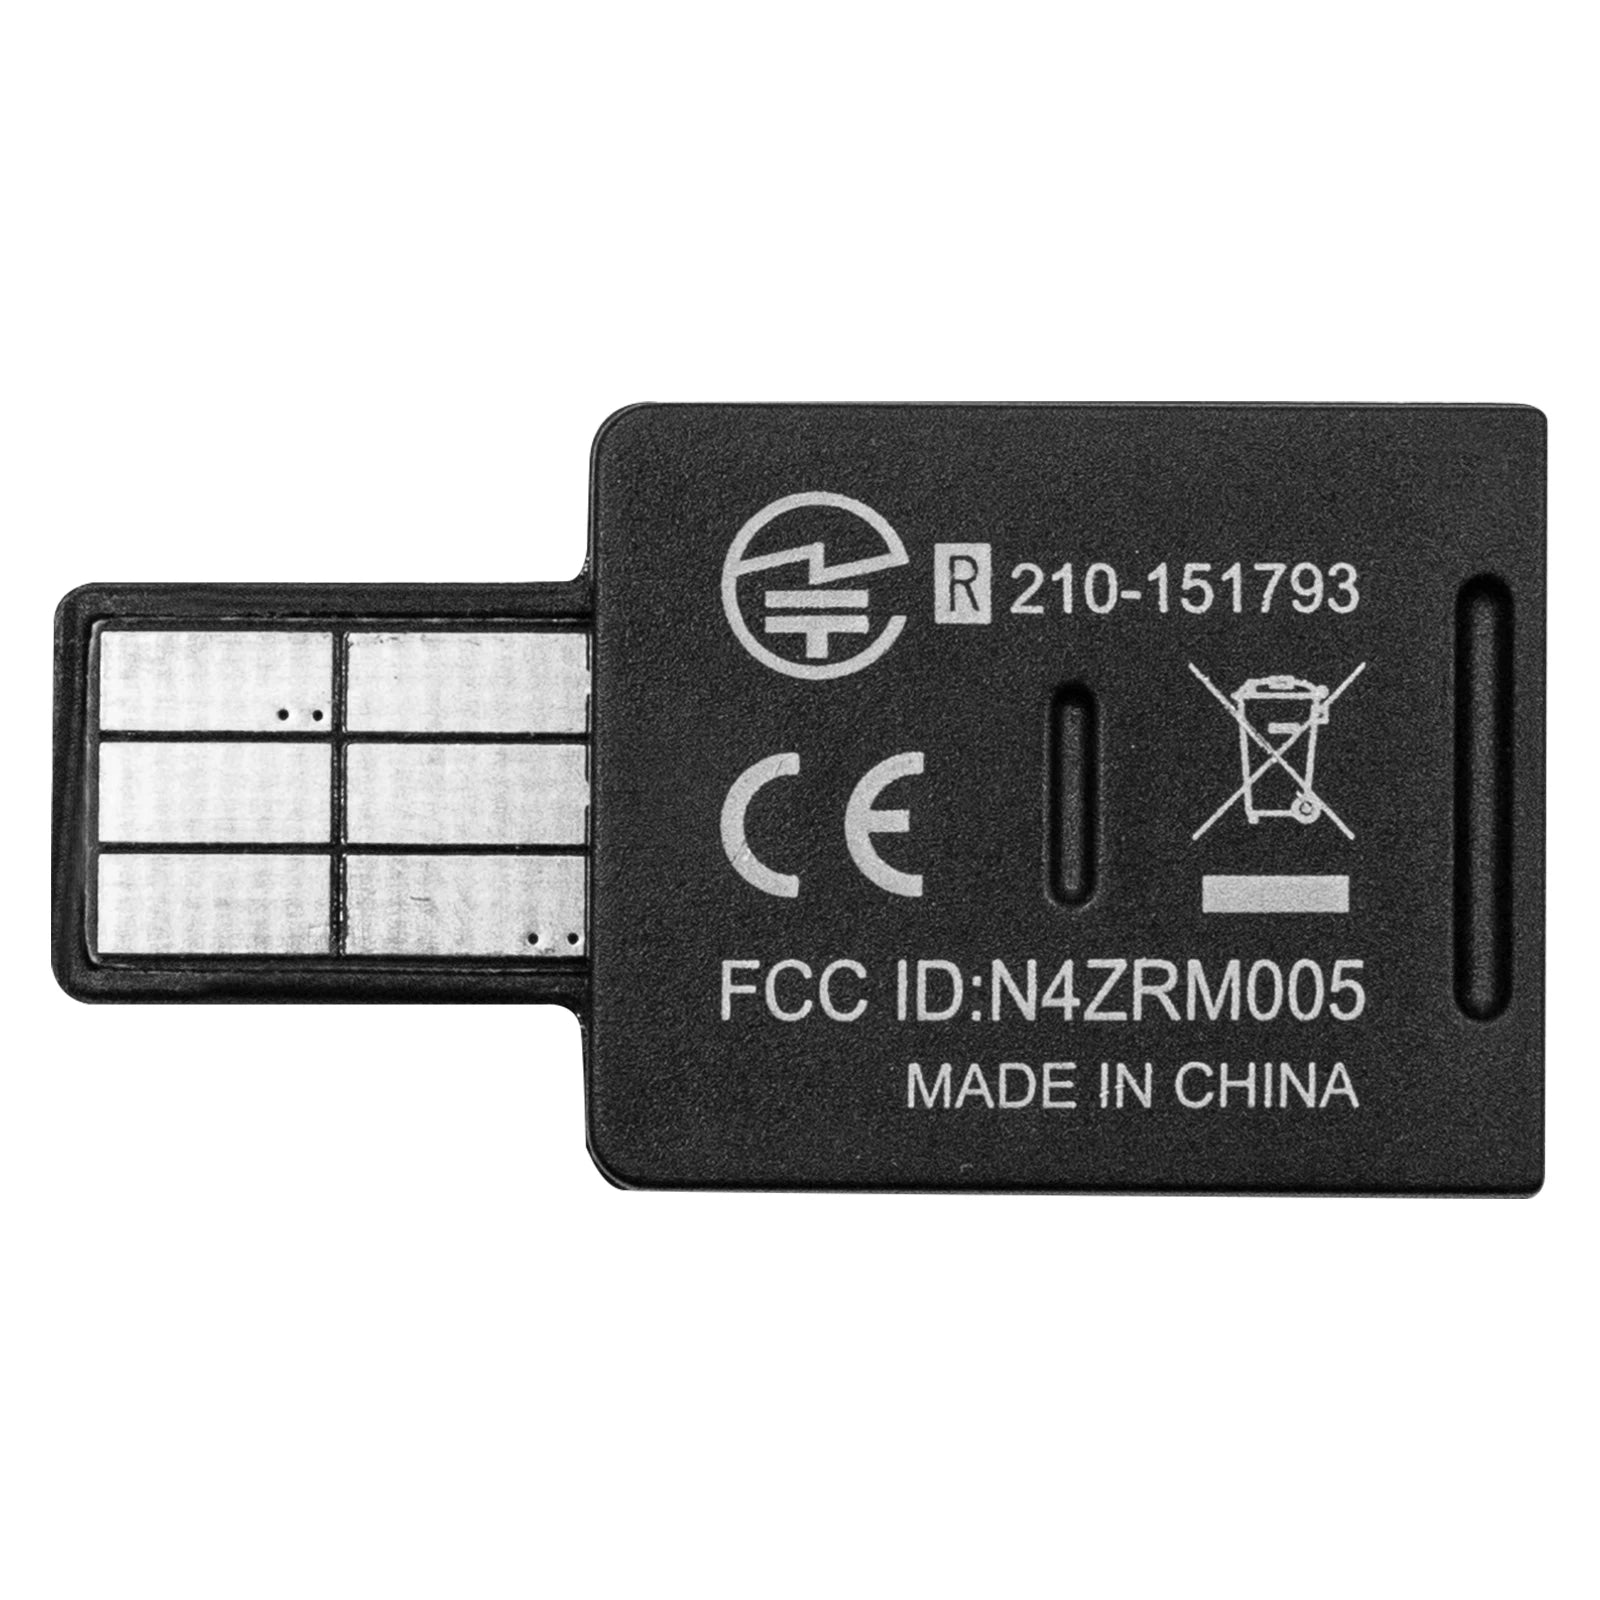 FCC ID:N4ZRMOO5 MADE IN CHINA